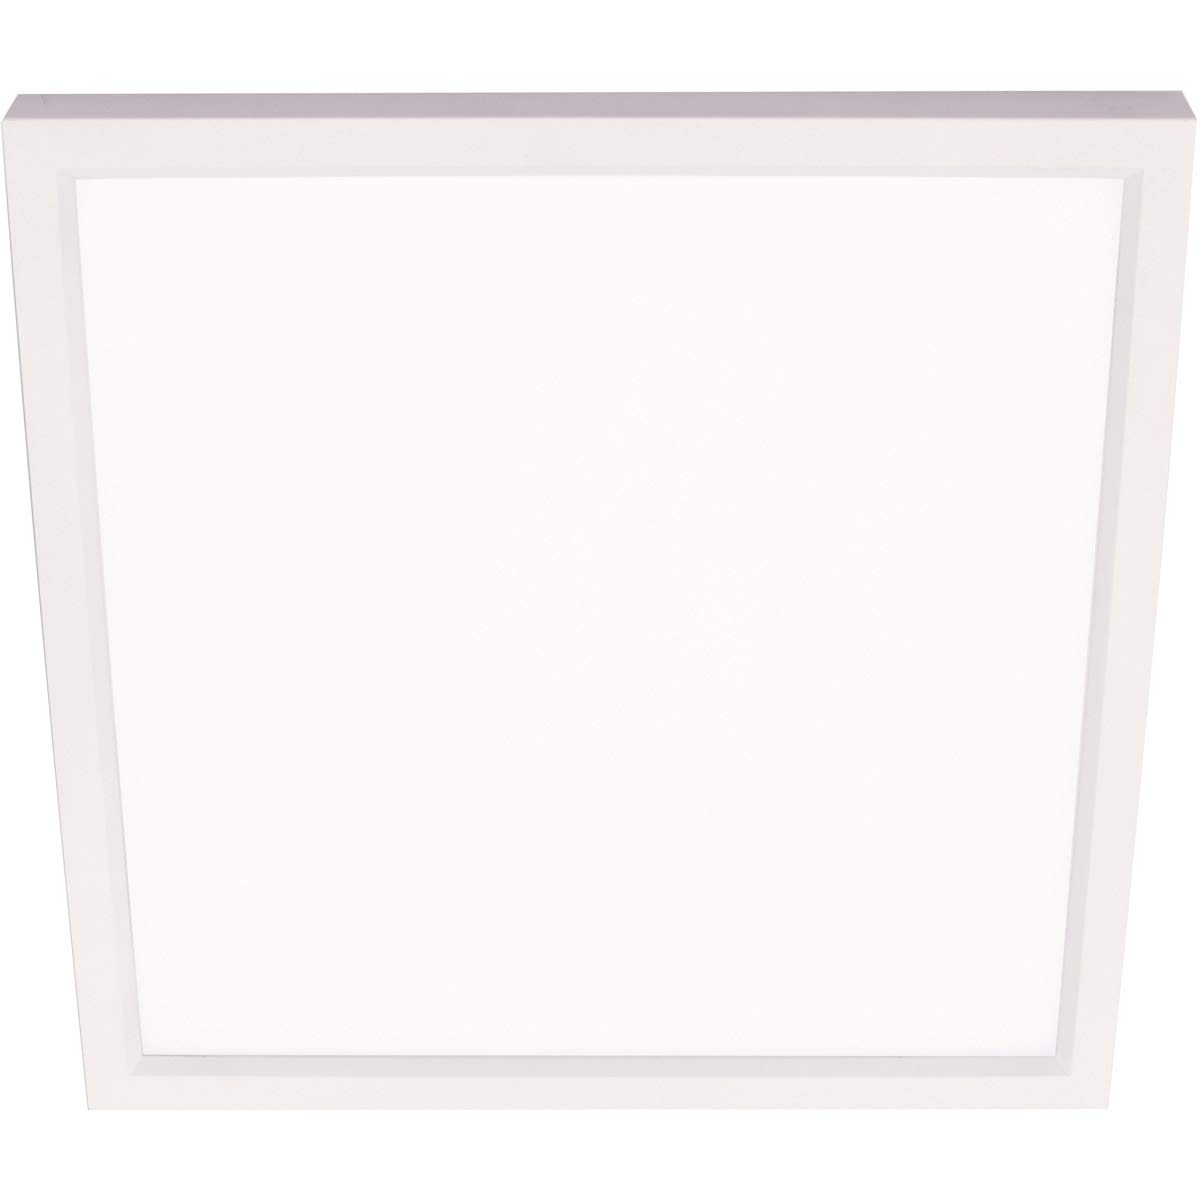 Aspect EgSF0913L30D1WH Edge Square ceiling Light Fixture, White